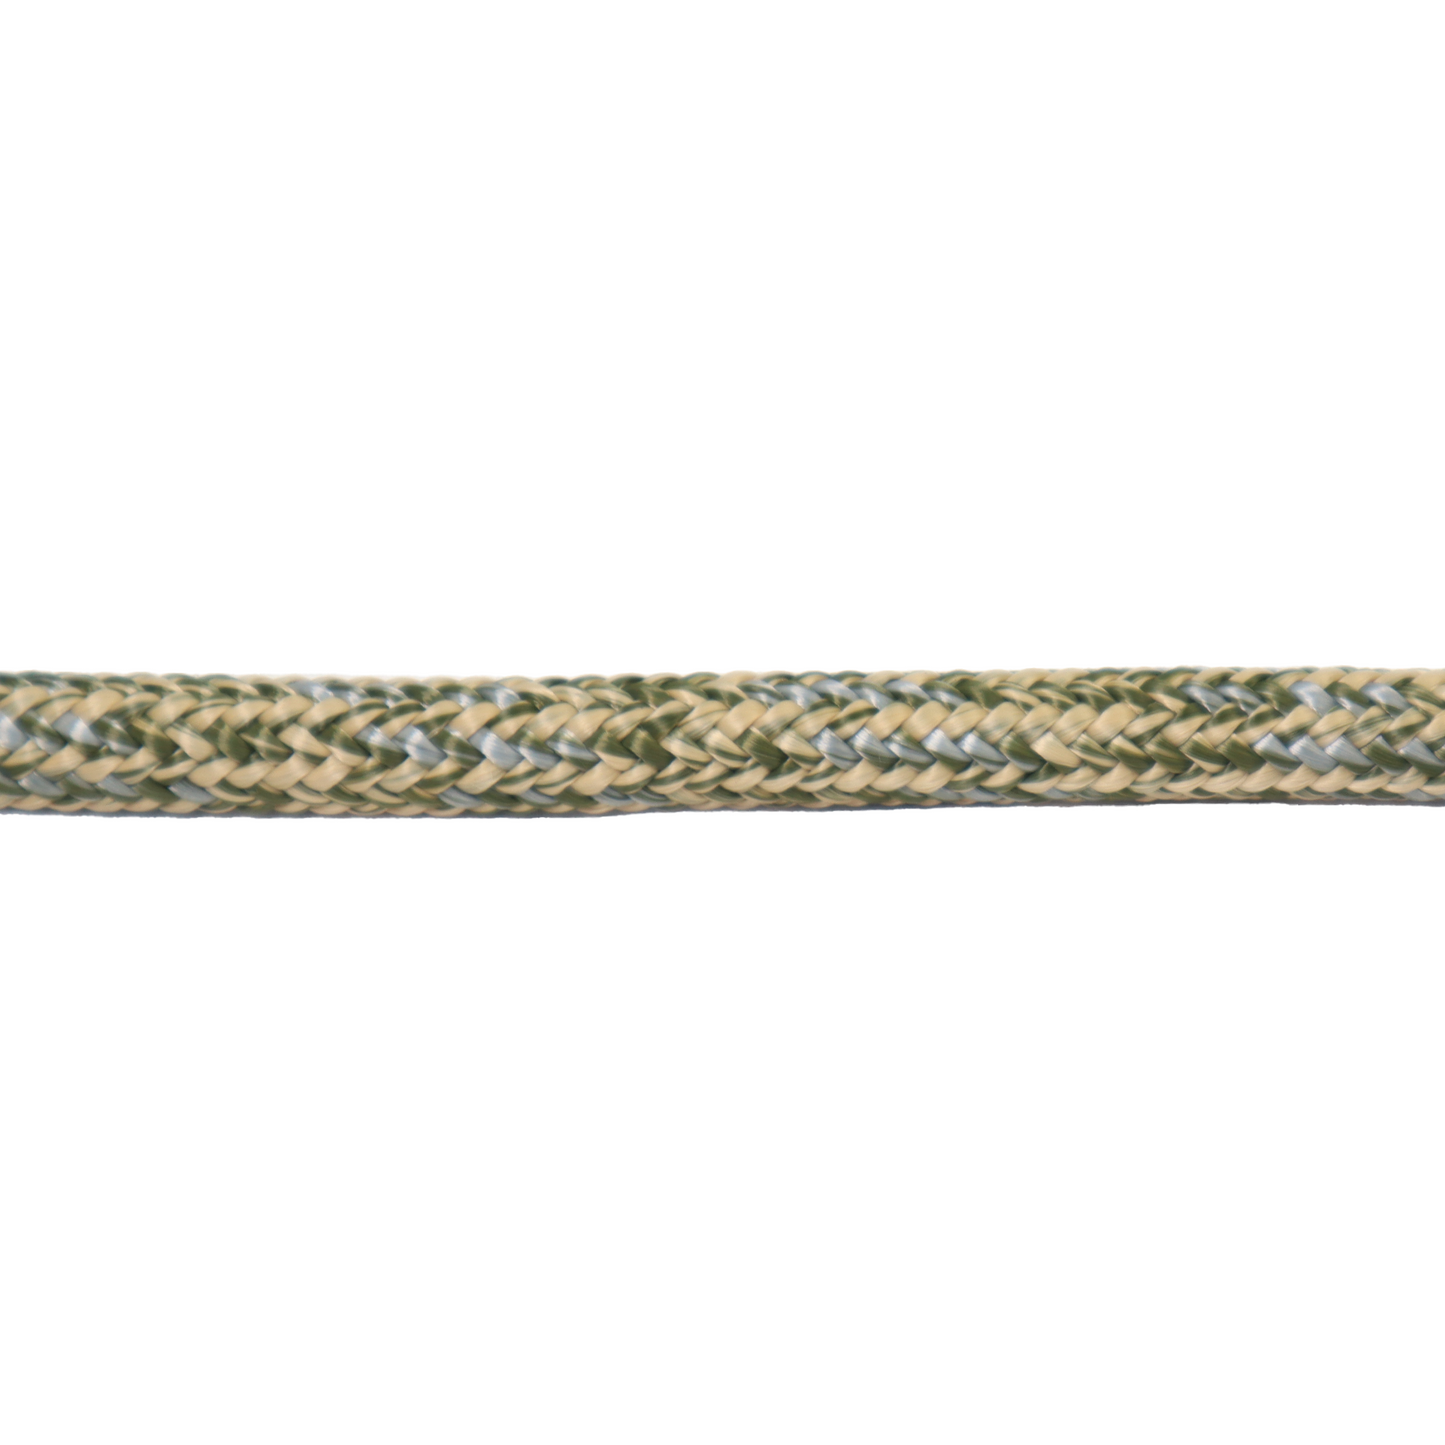 Desert Camo 8mm Rope Close Up